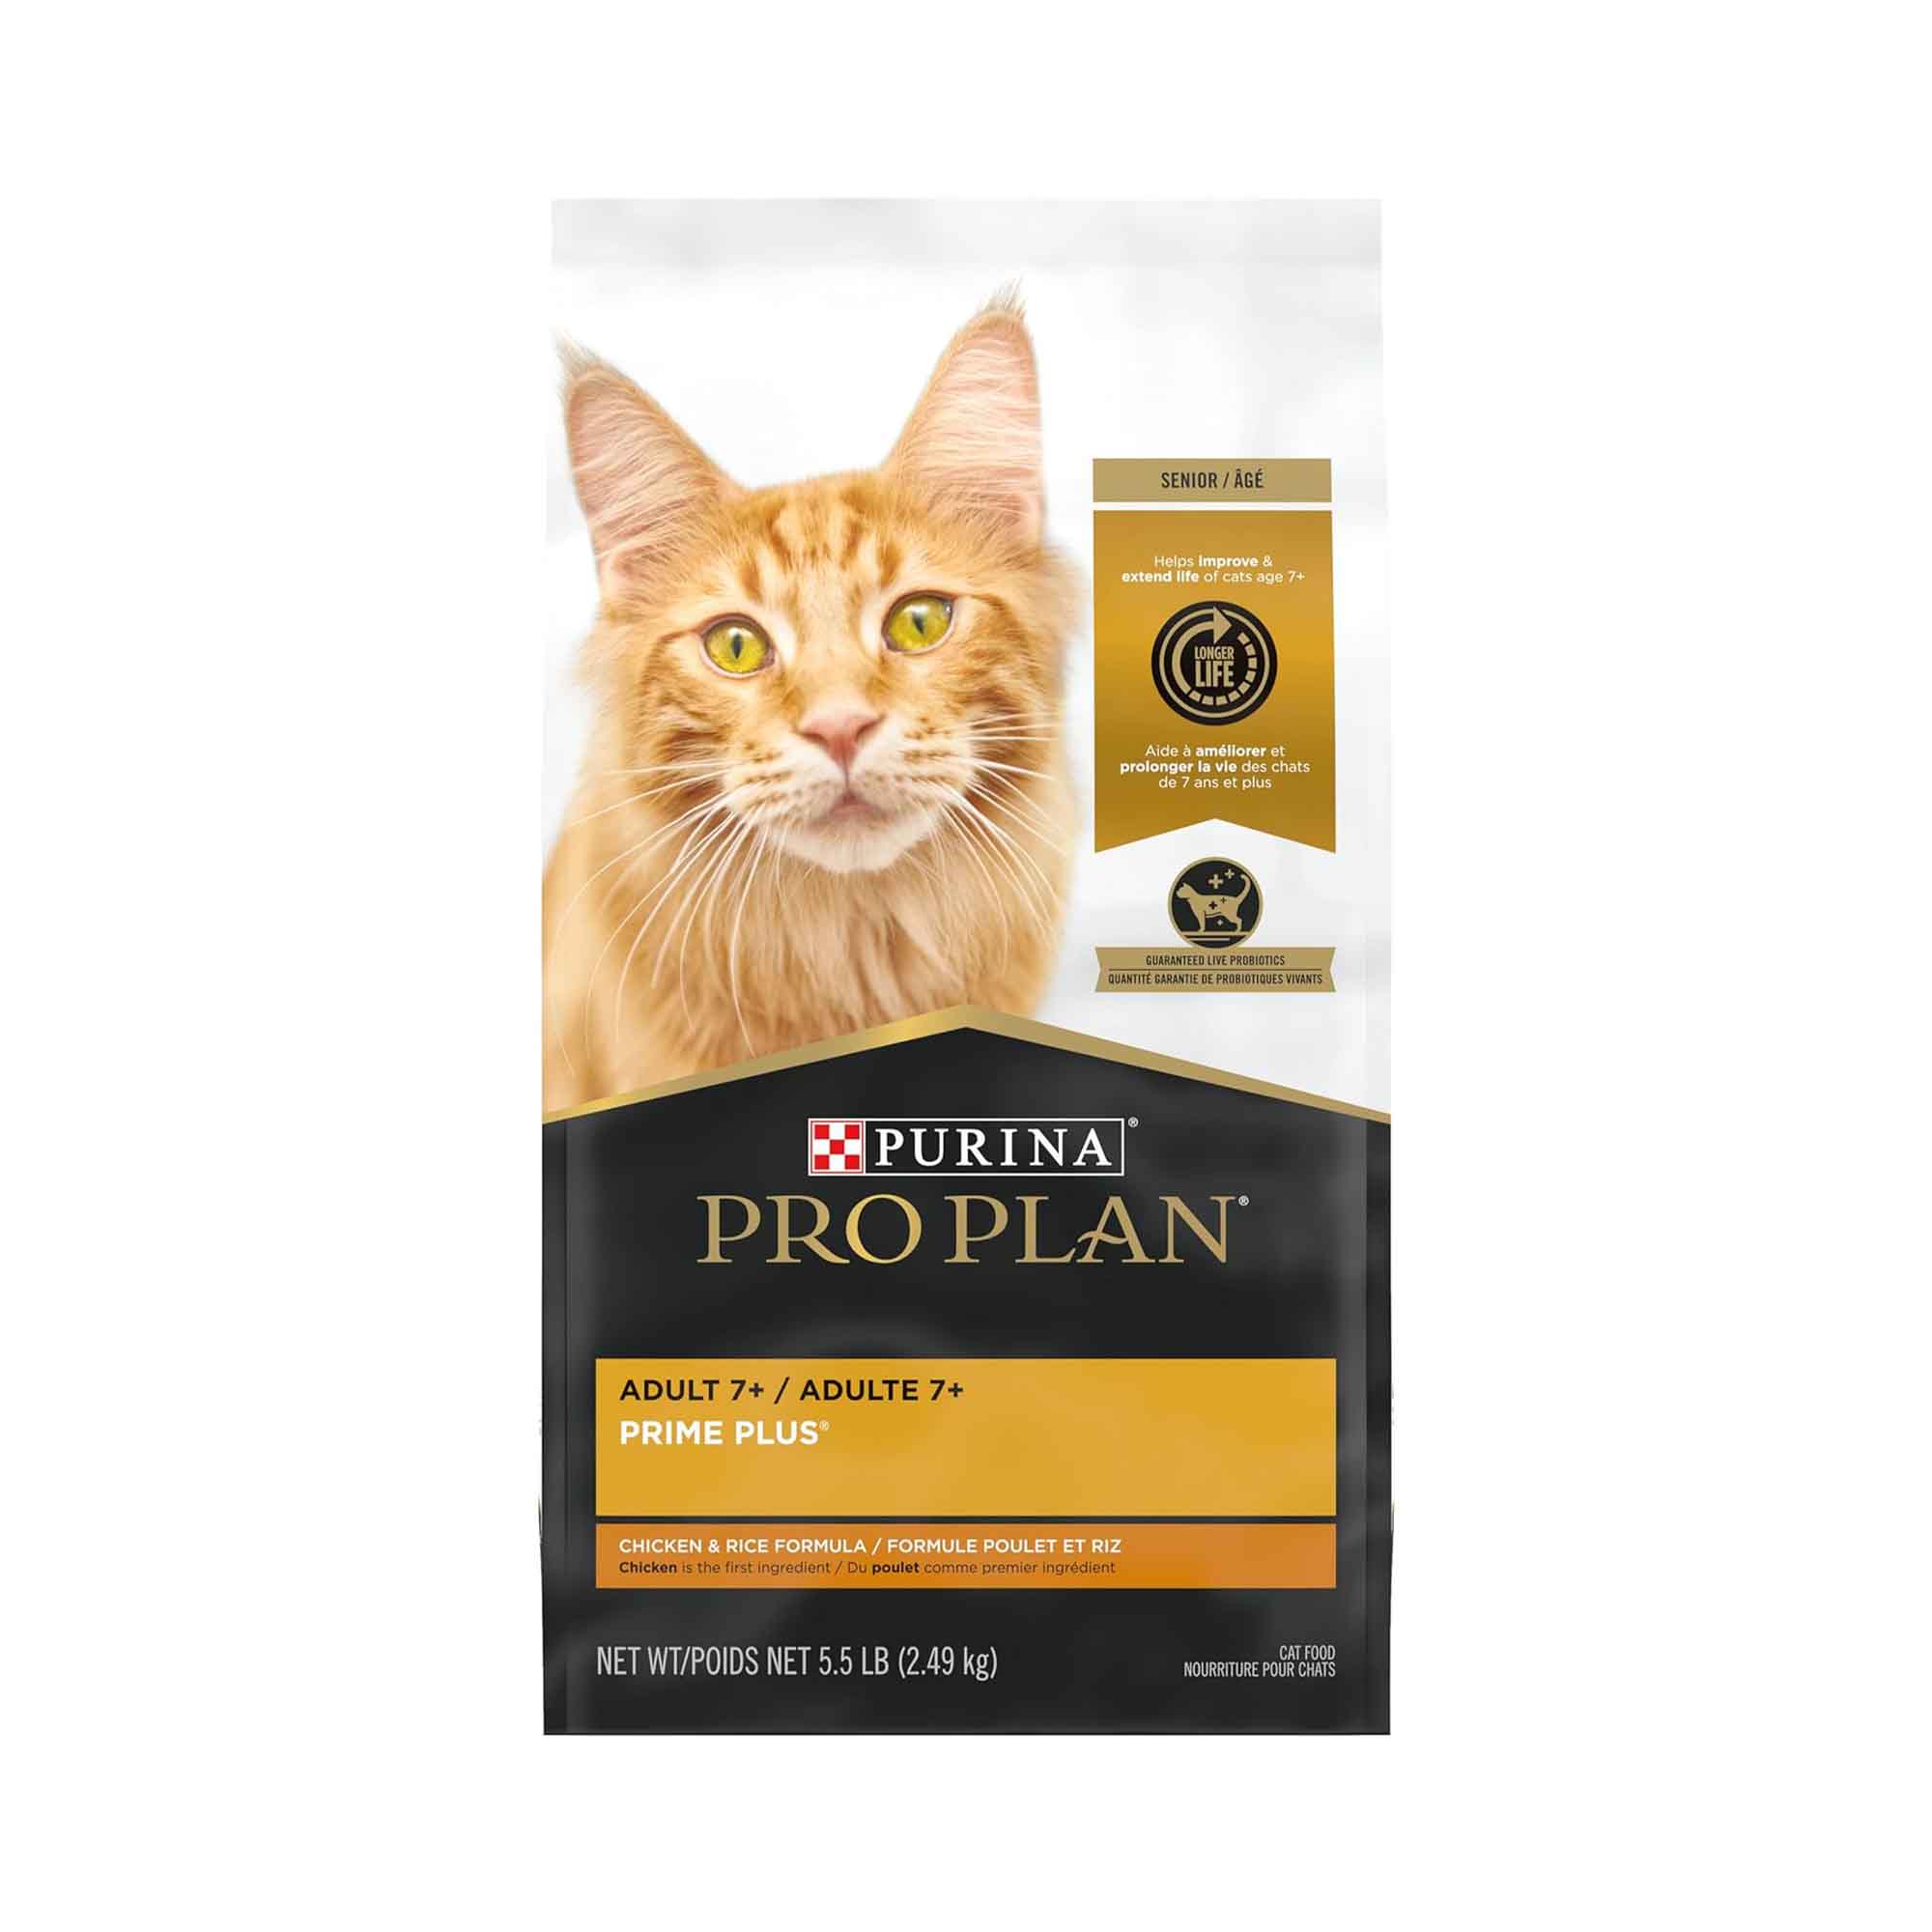 Pro Plan Prime Plus Adult 7+, Dry Cat Food - Chicken & Rice Formula